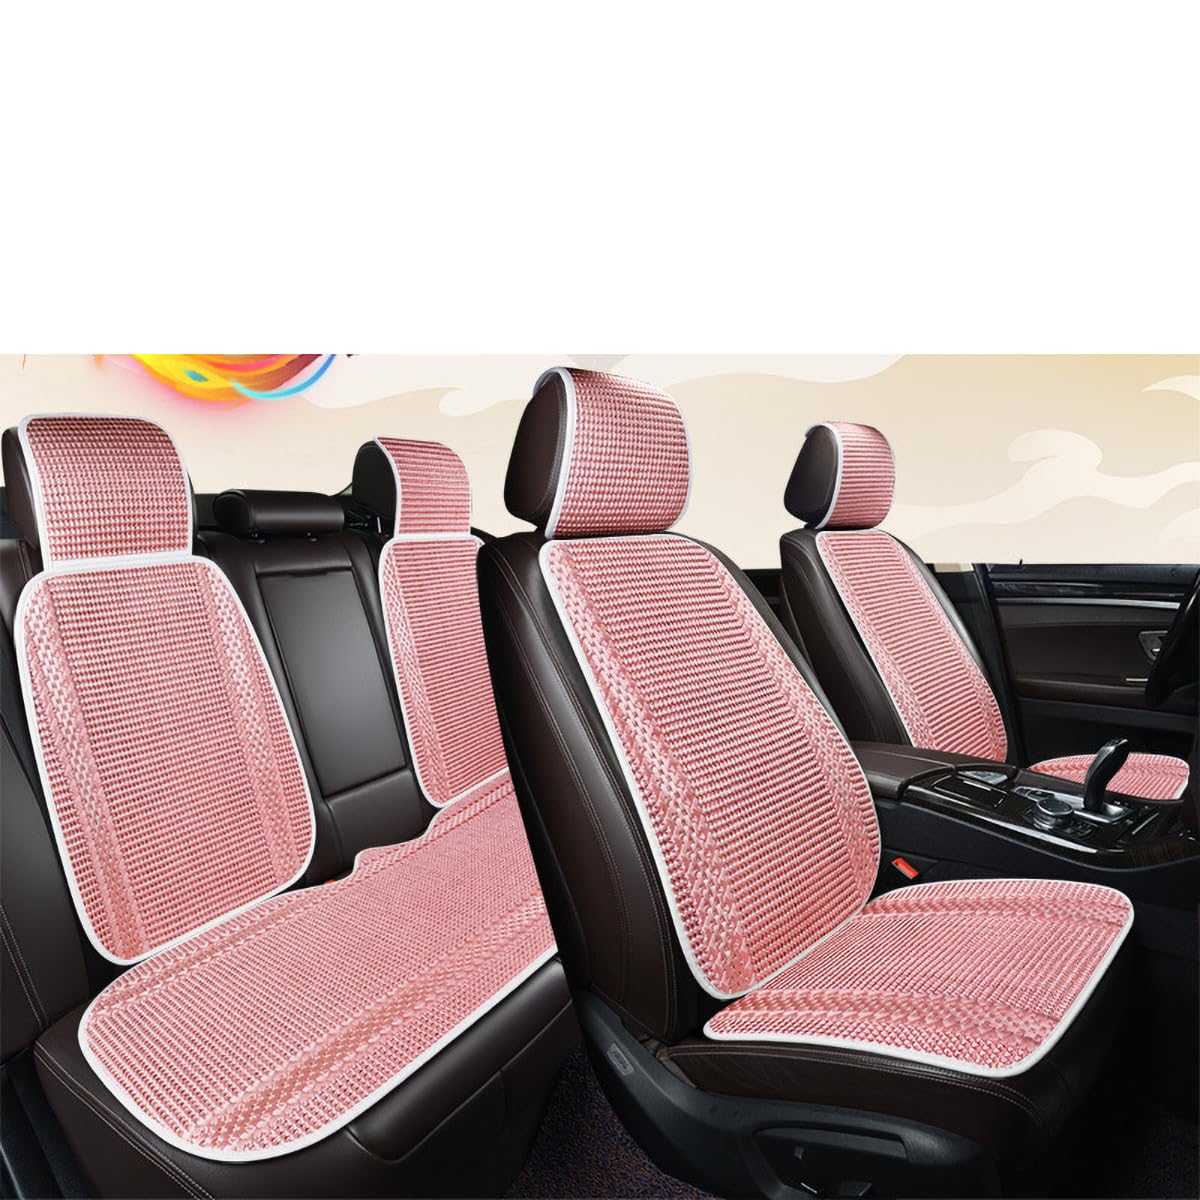 ASNAT Belüfteter Autositzbezug den Sommer für FIAT Linea 1.4, Atmungsaktiv Und Bequem, Anti Rutsch Autositzschoner, E-pink-7PCS von ASNAT